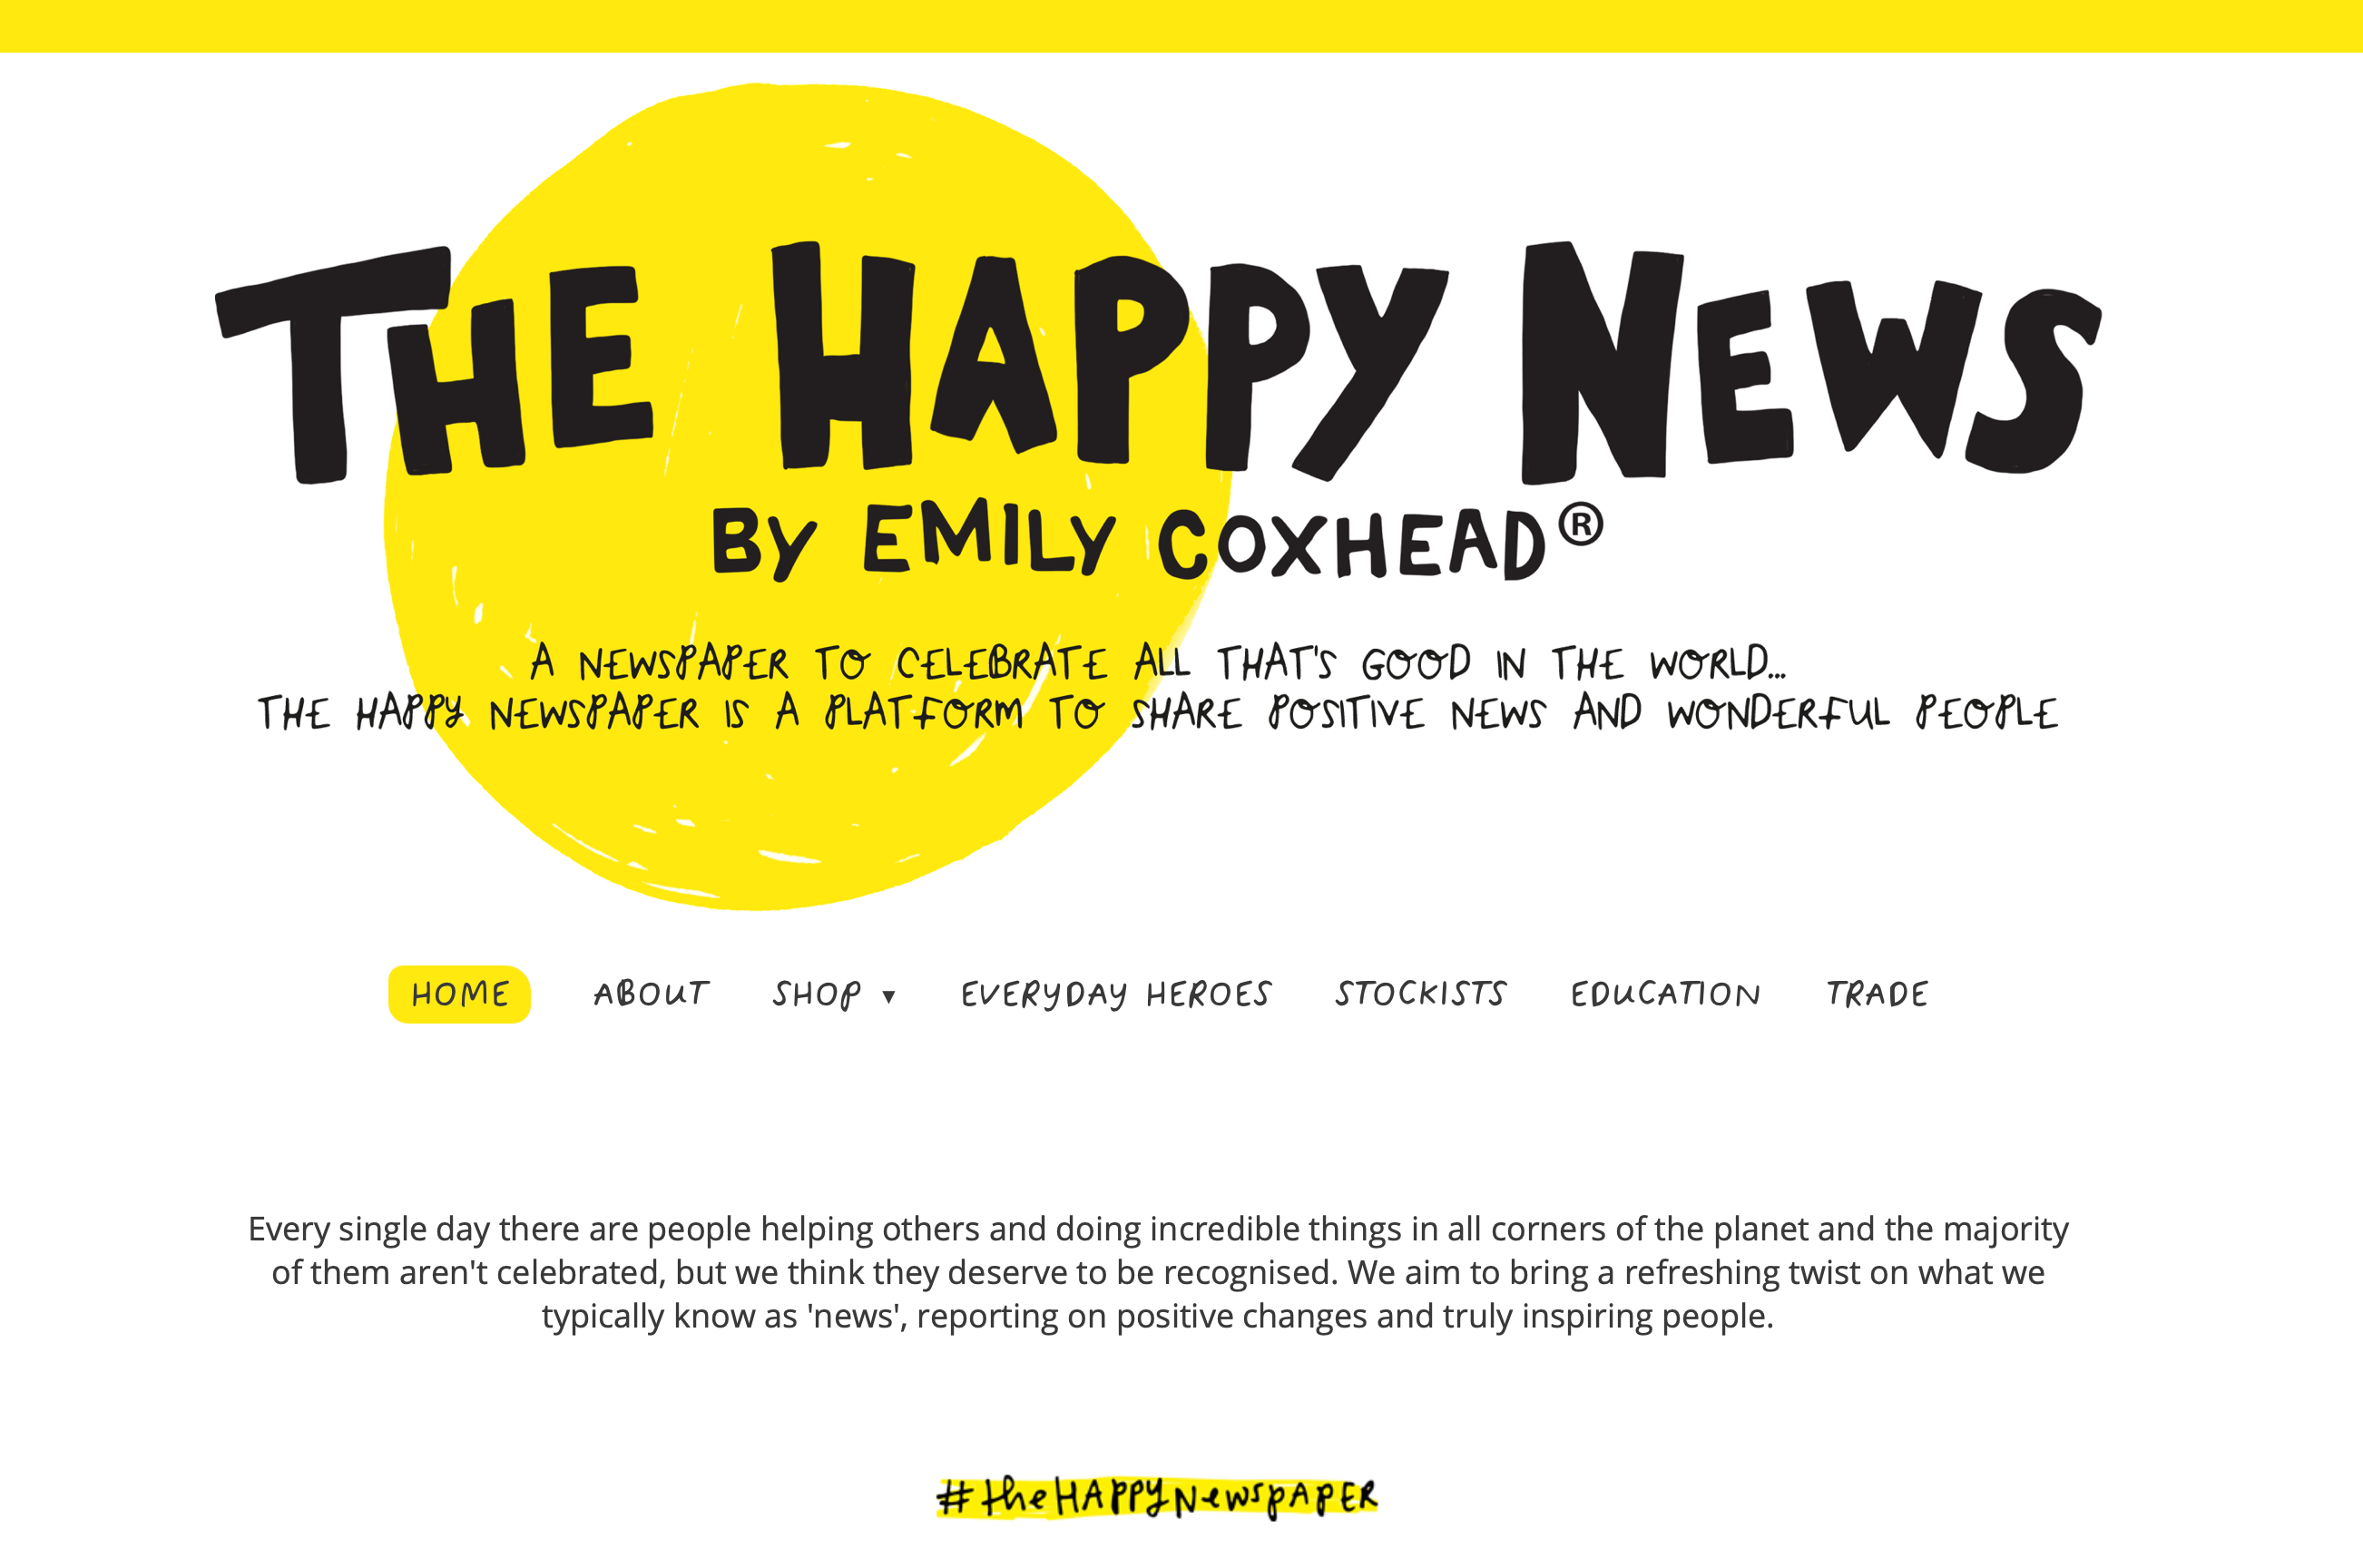 The Happy News homepage